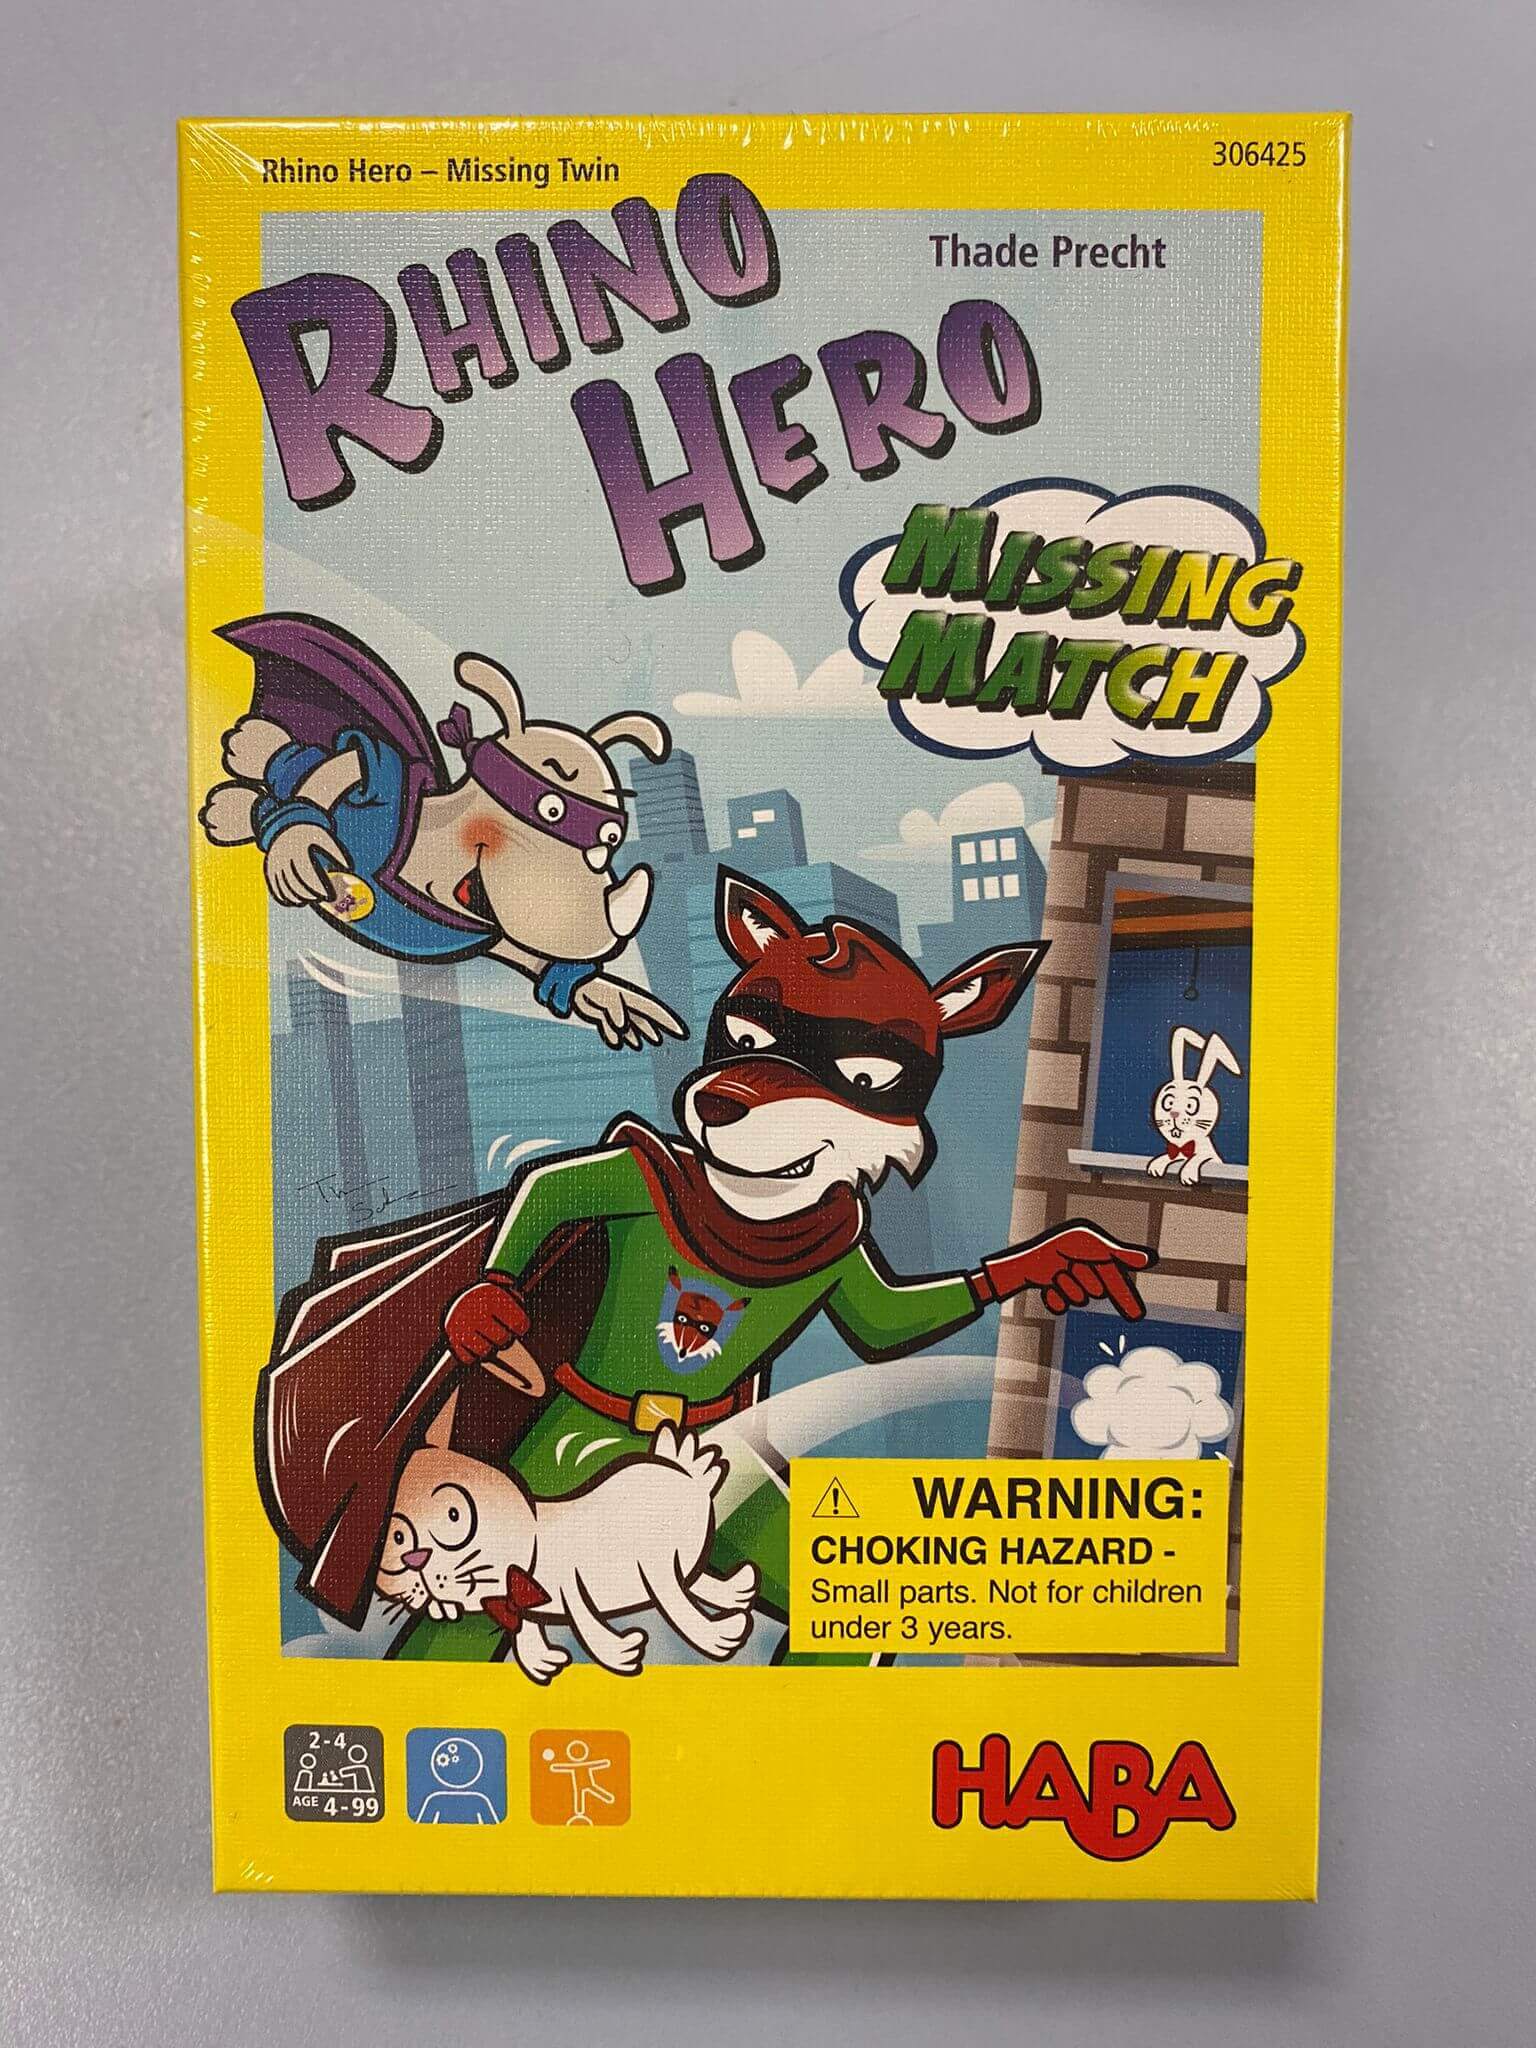 Rhino Hero (Super Battle) HABA